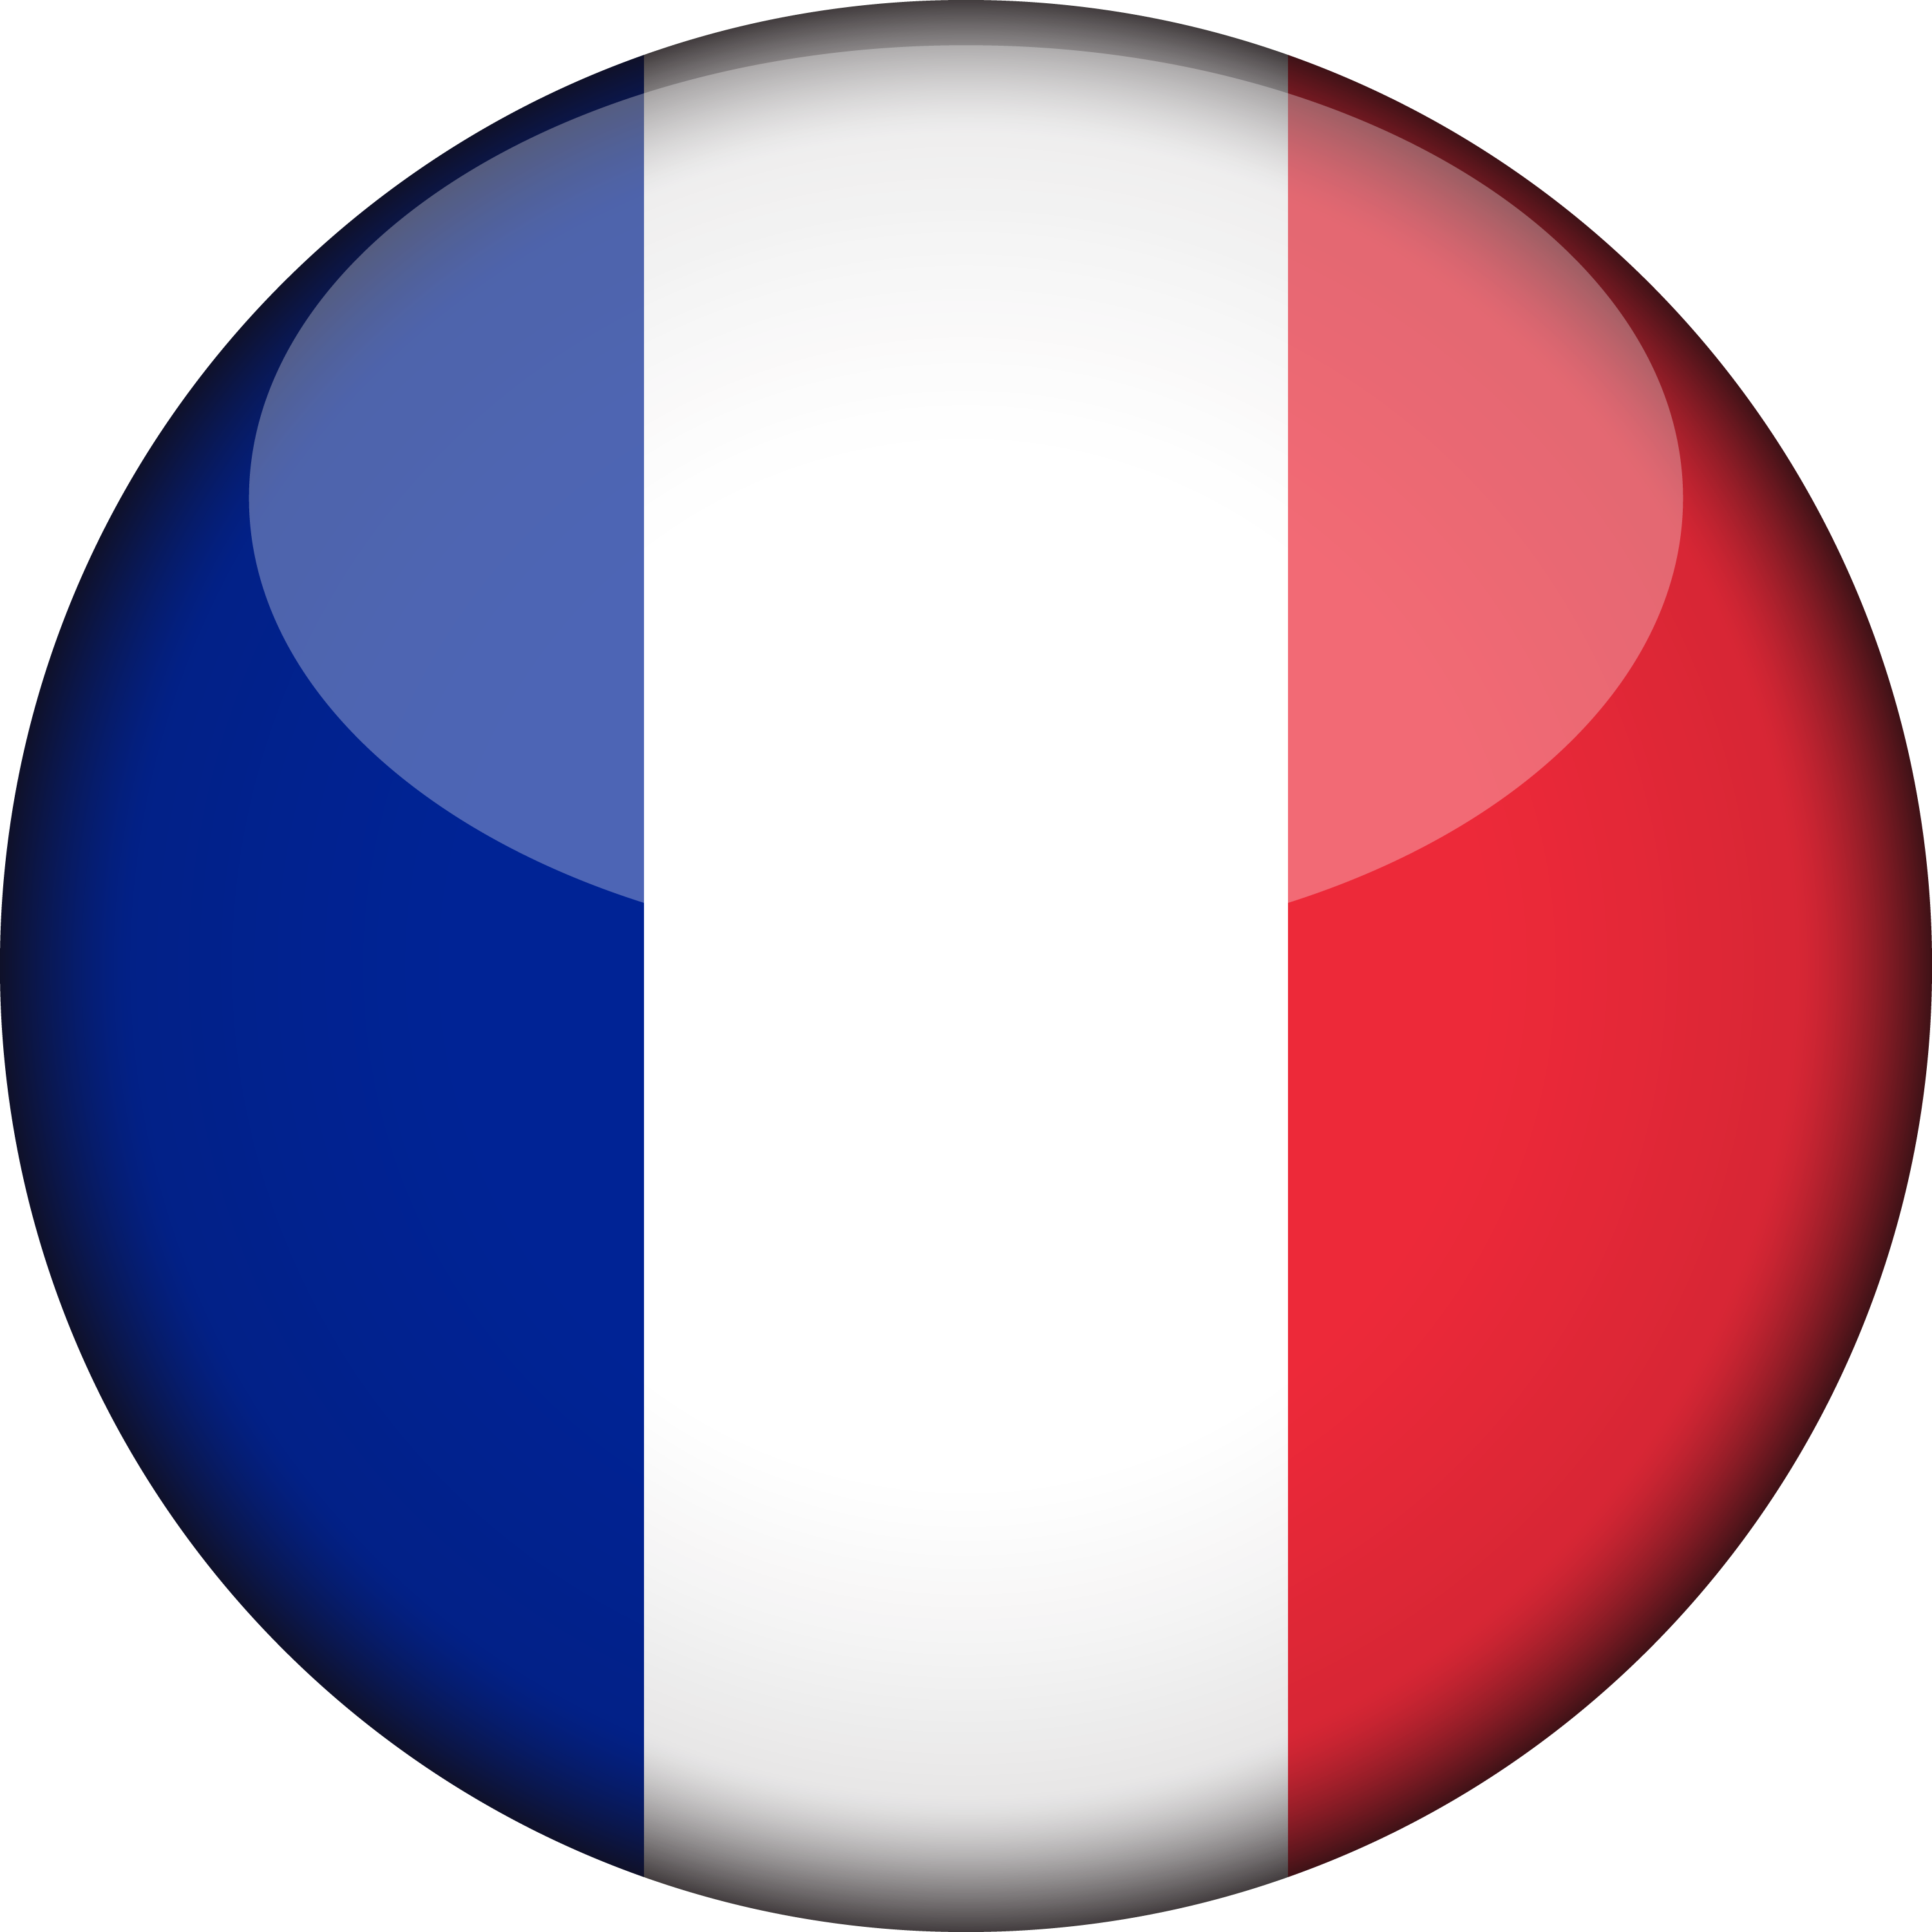 France (Republic Of) 2.5% Logo